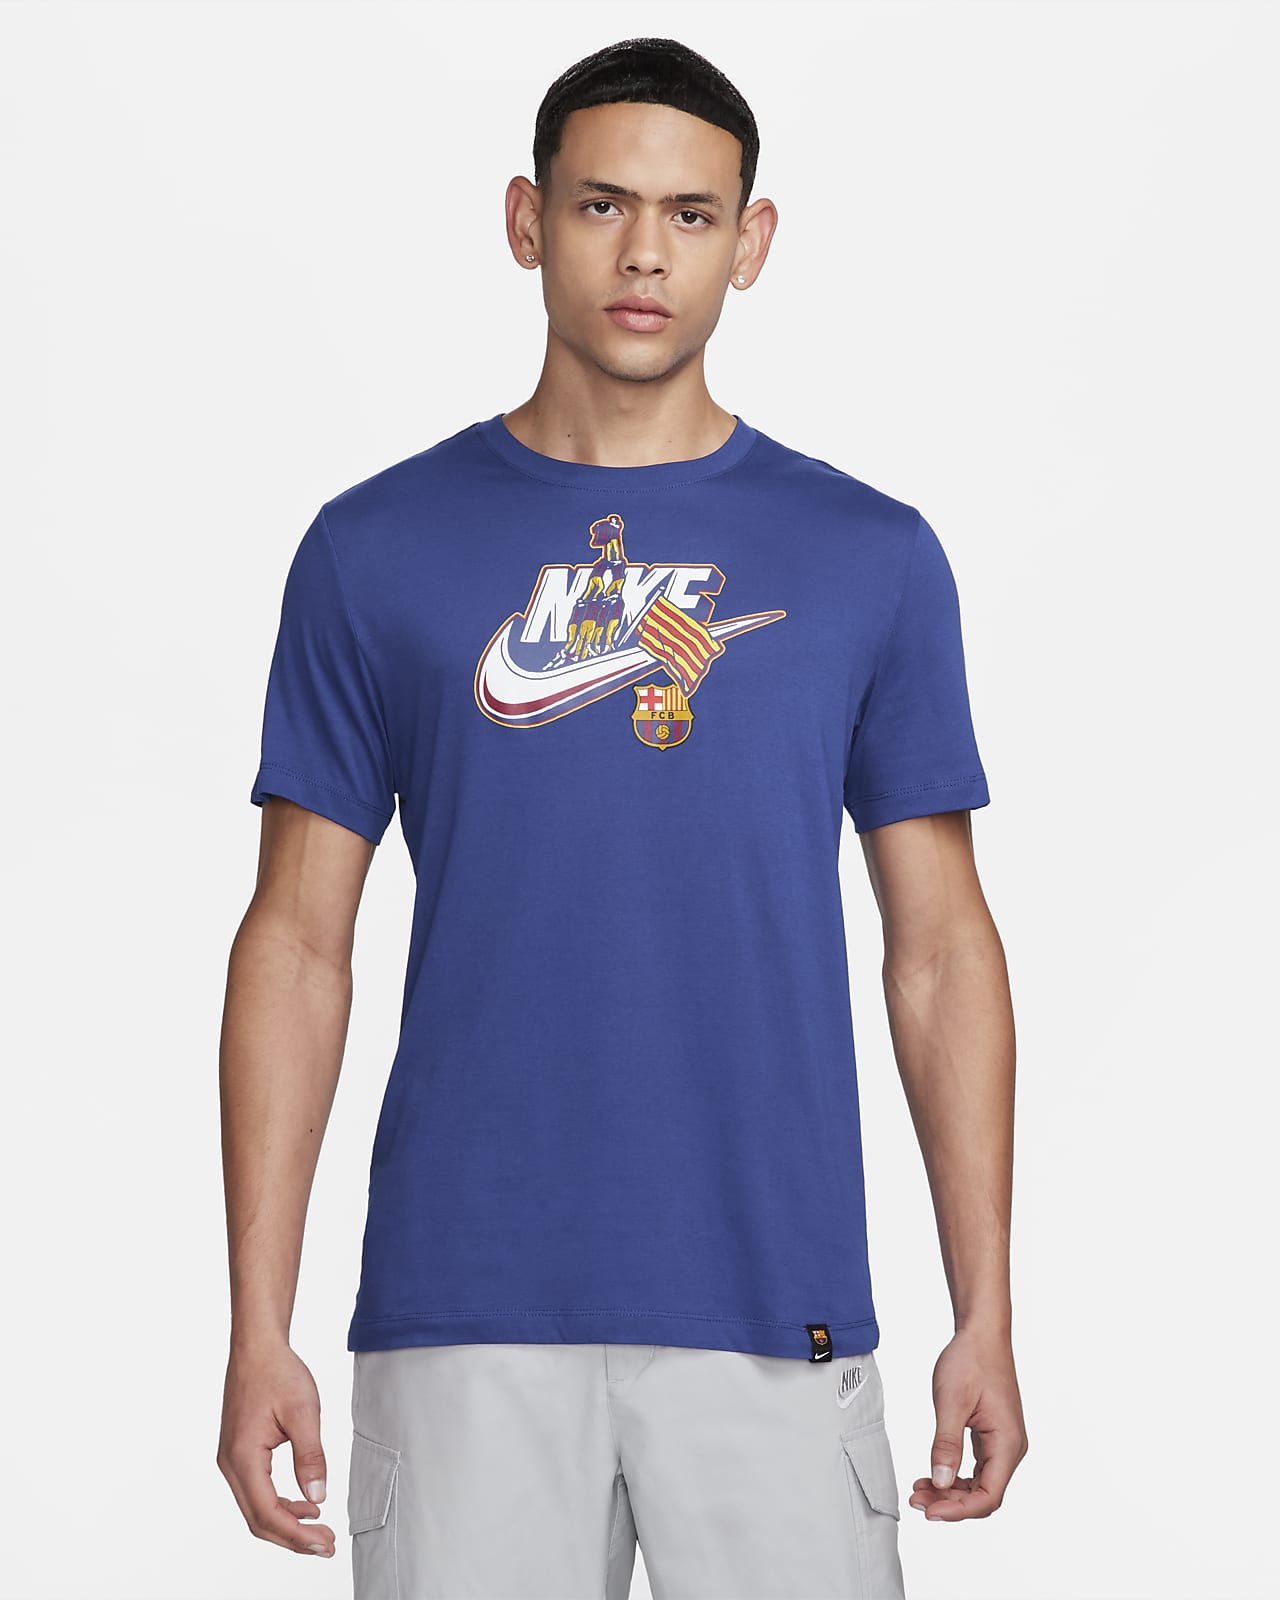 FC Barcelona Camiseta Nike - Hombre